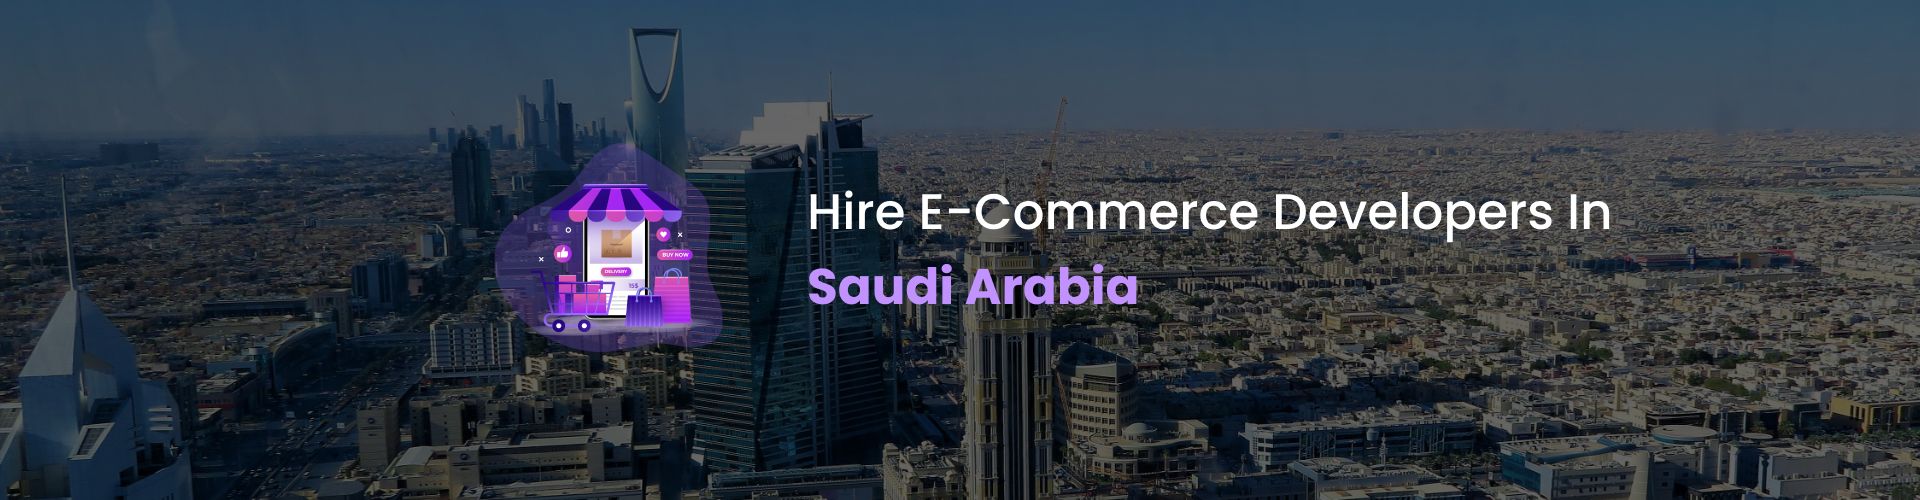 ecommerce developers saudi arabia